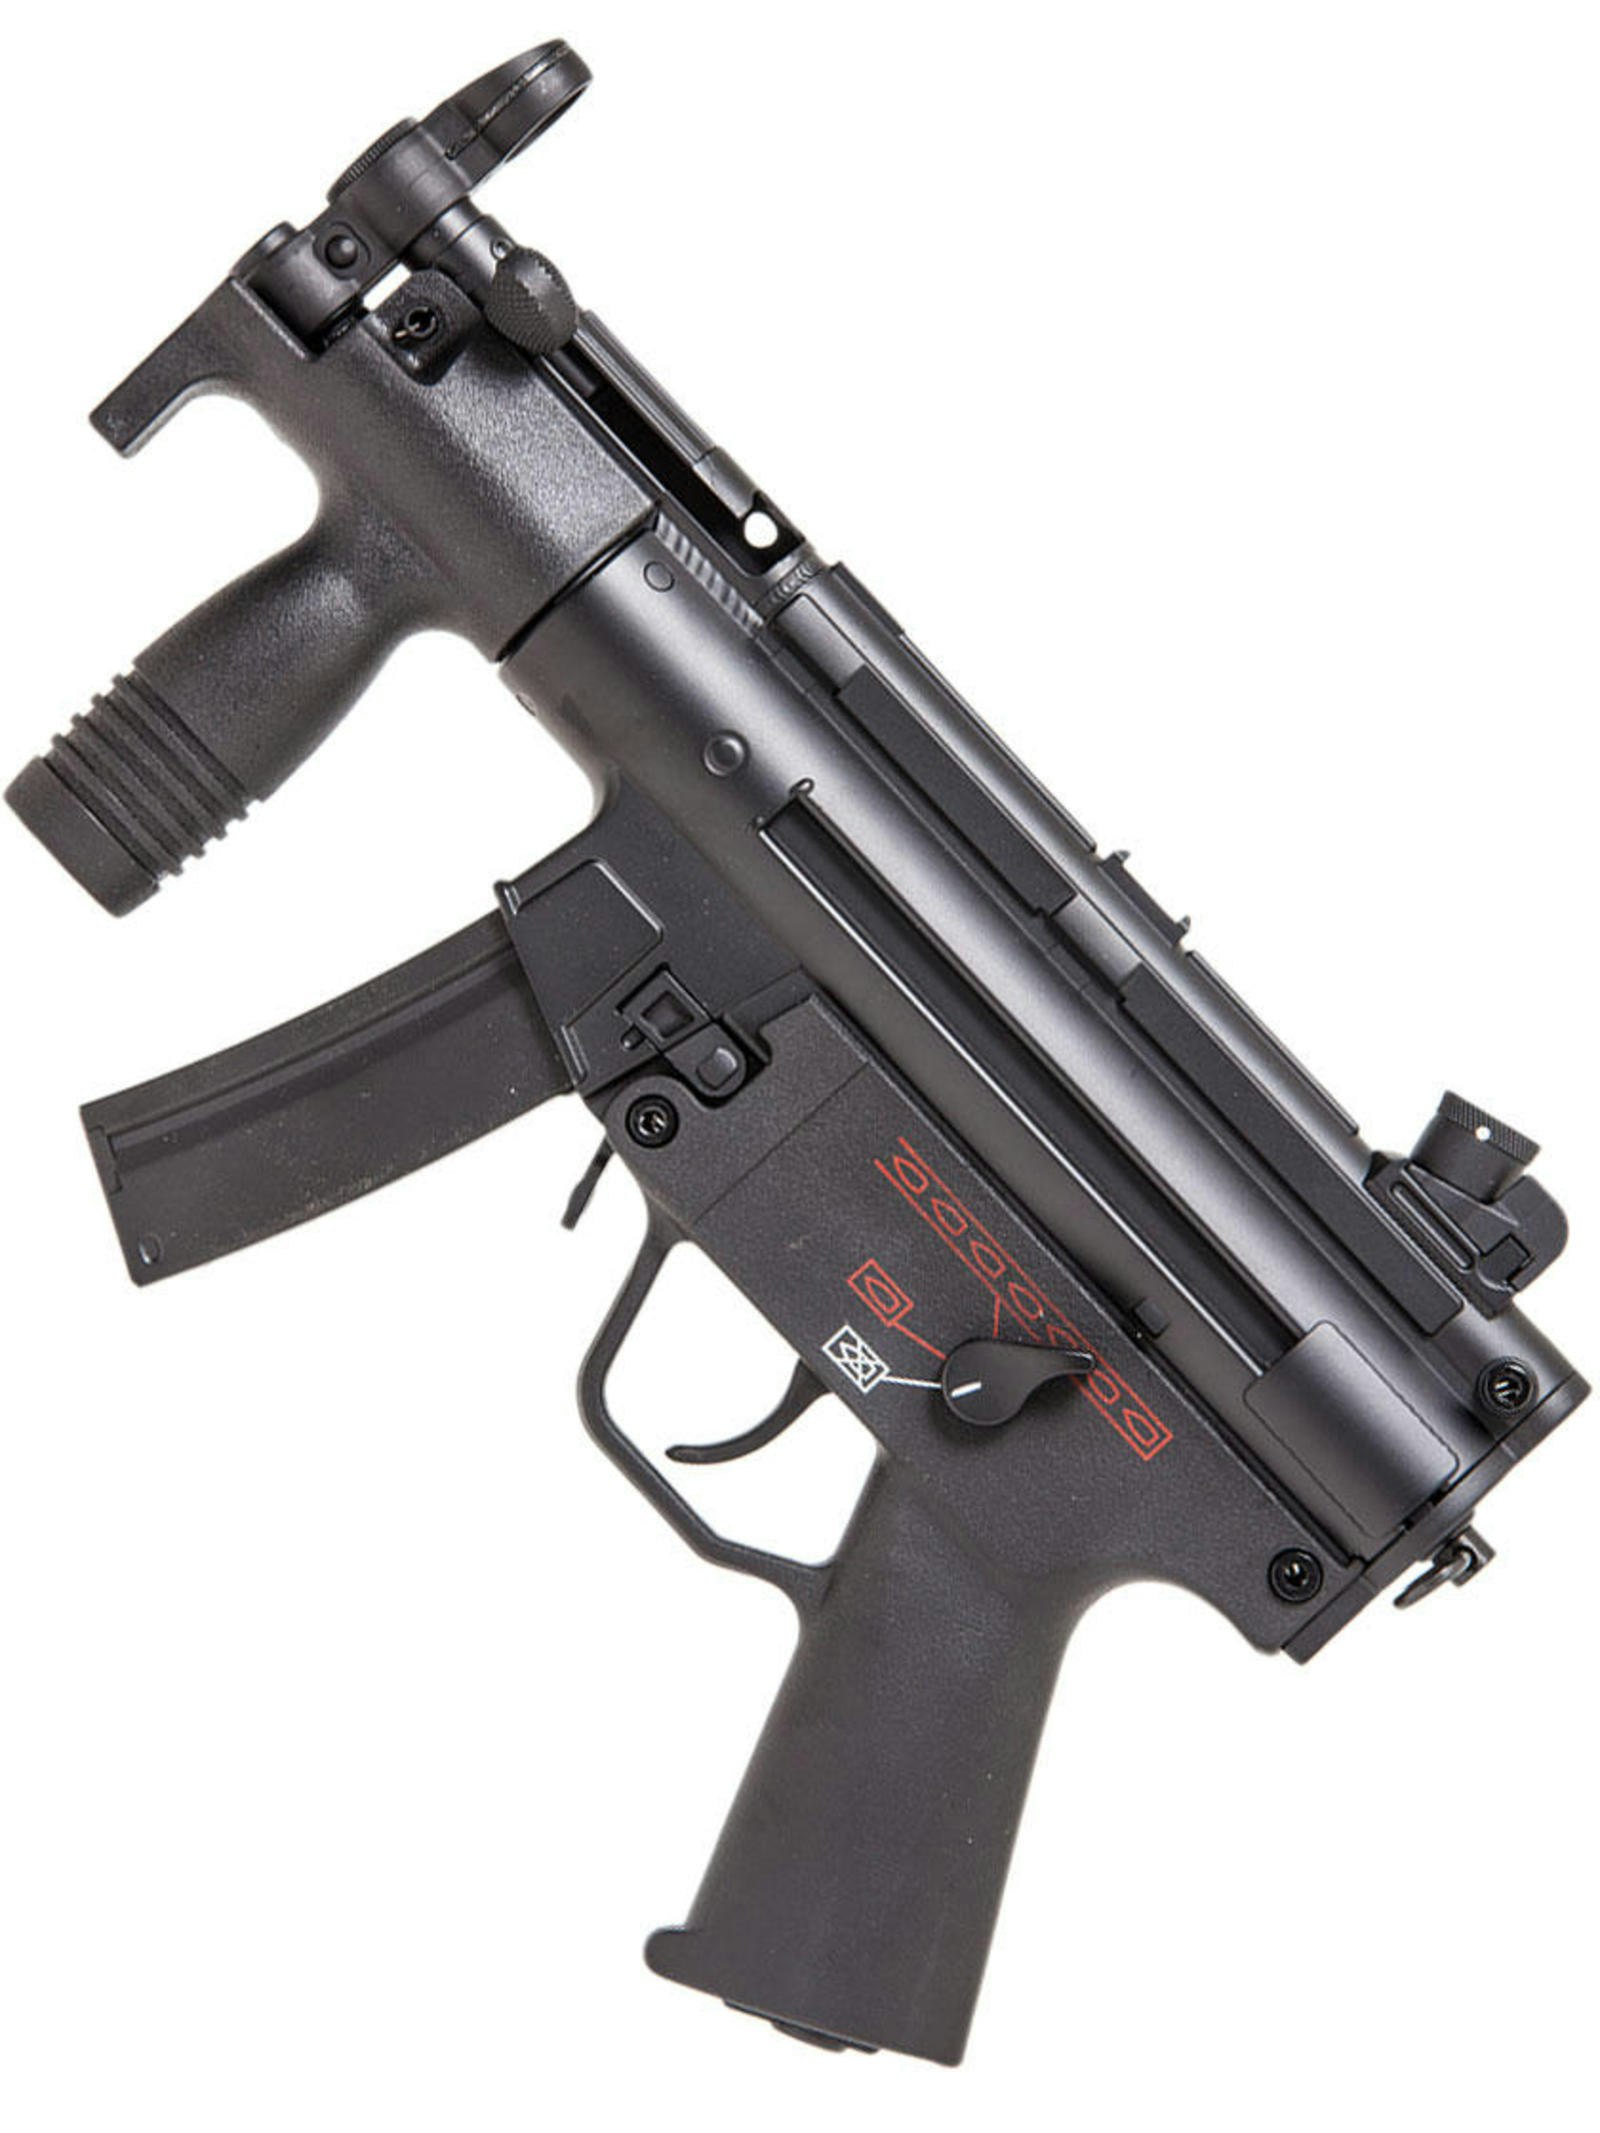 Submachine Gun MP5 With Silencer Stock Photo - Image: 41878432